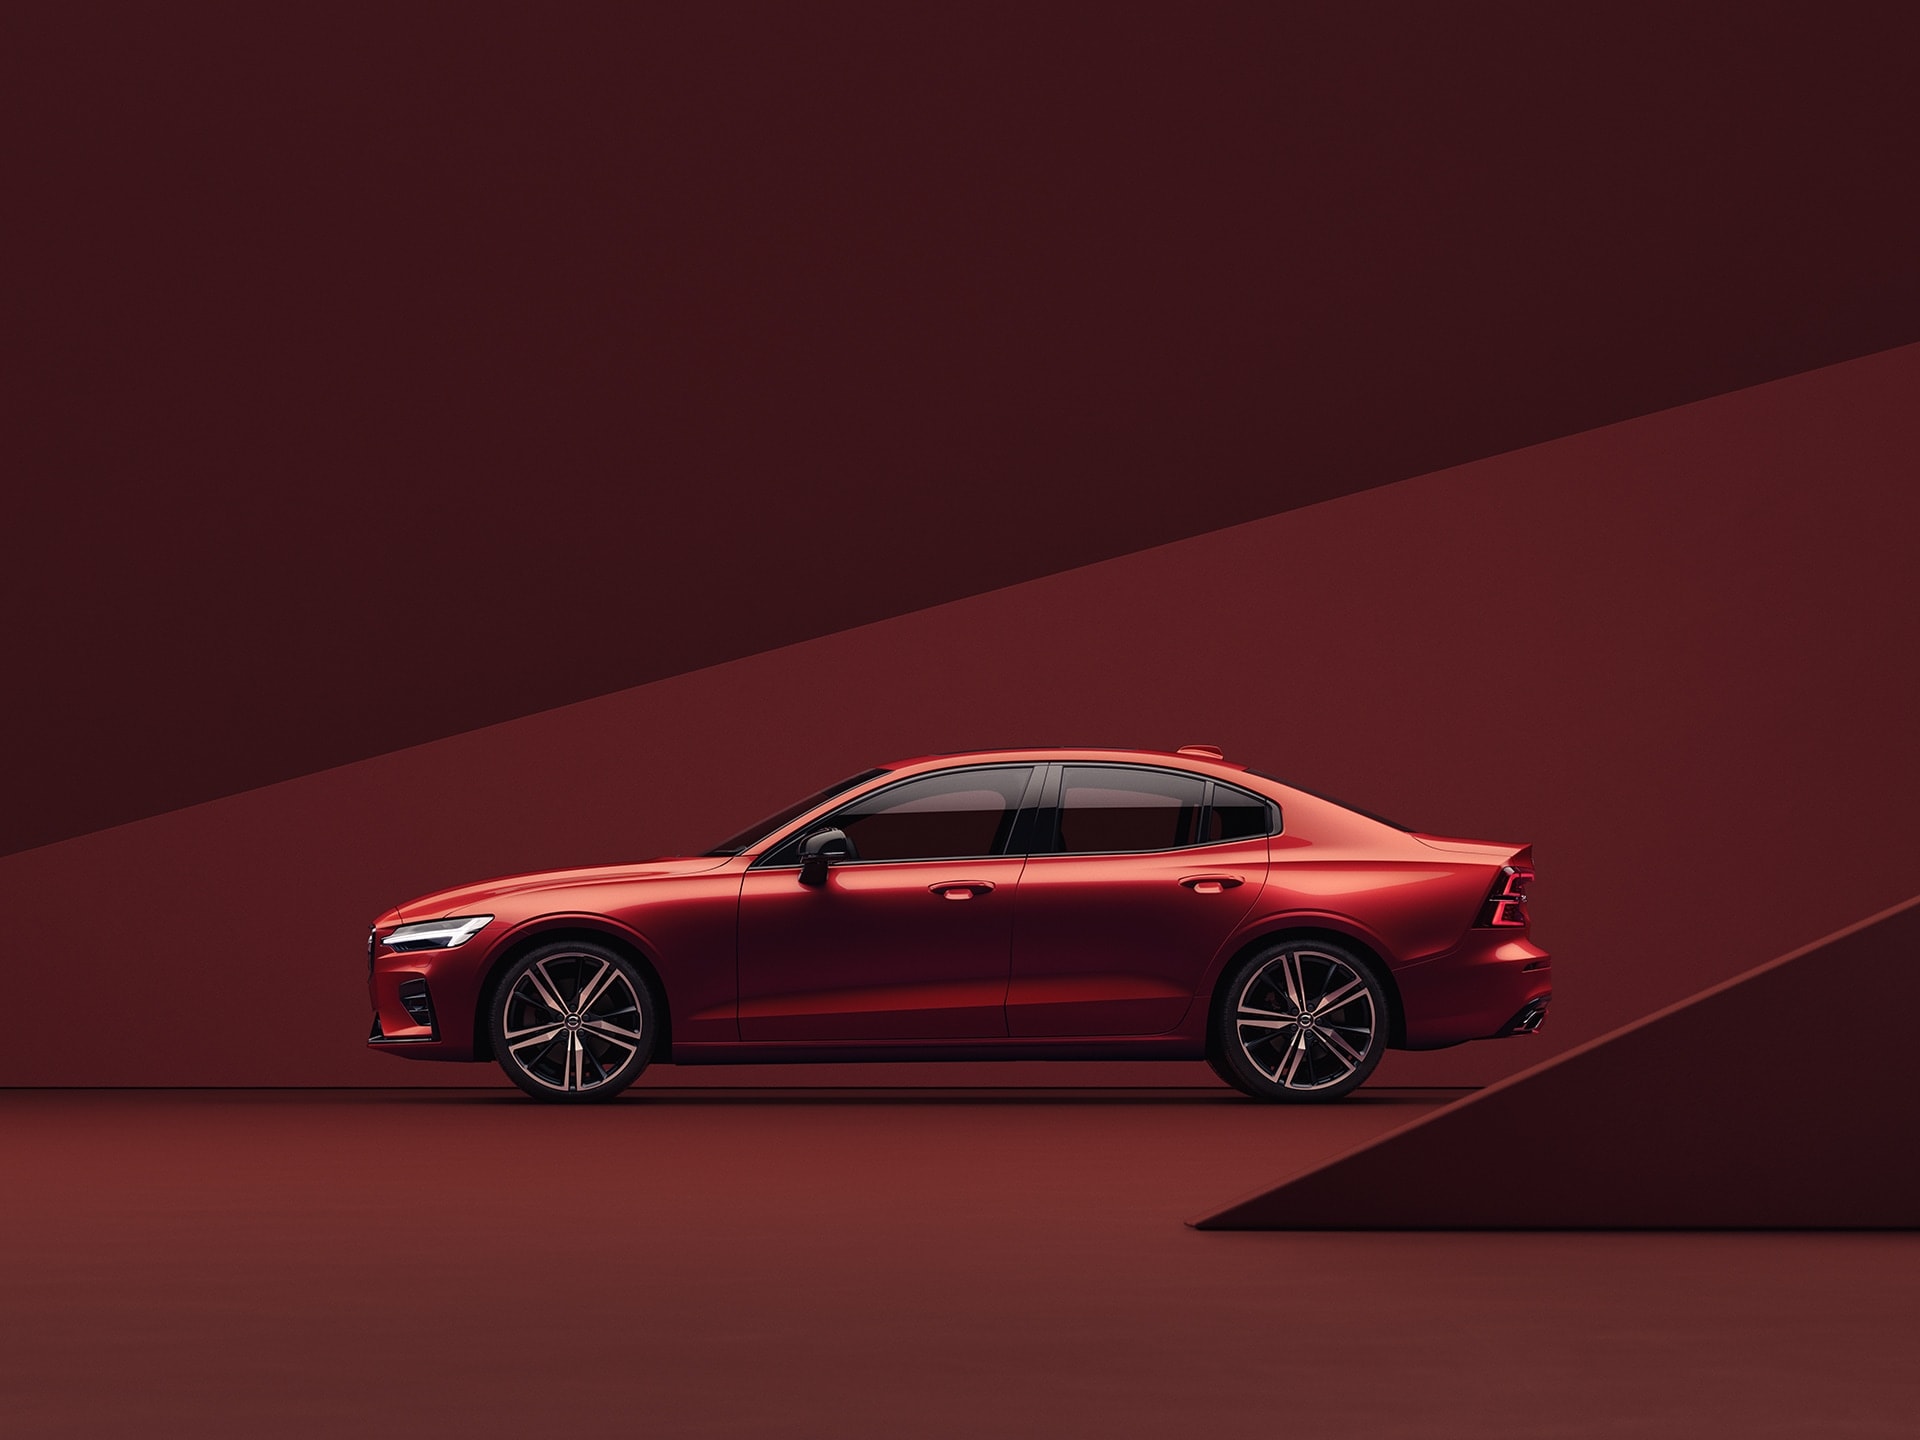 Volvo S60 красного цвета припаркованный на красном фоне